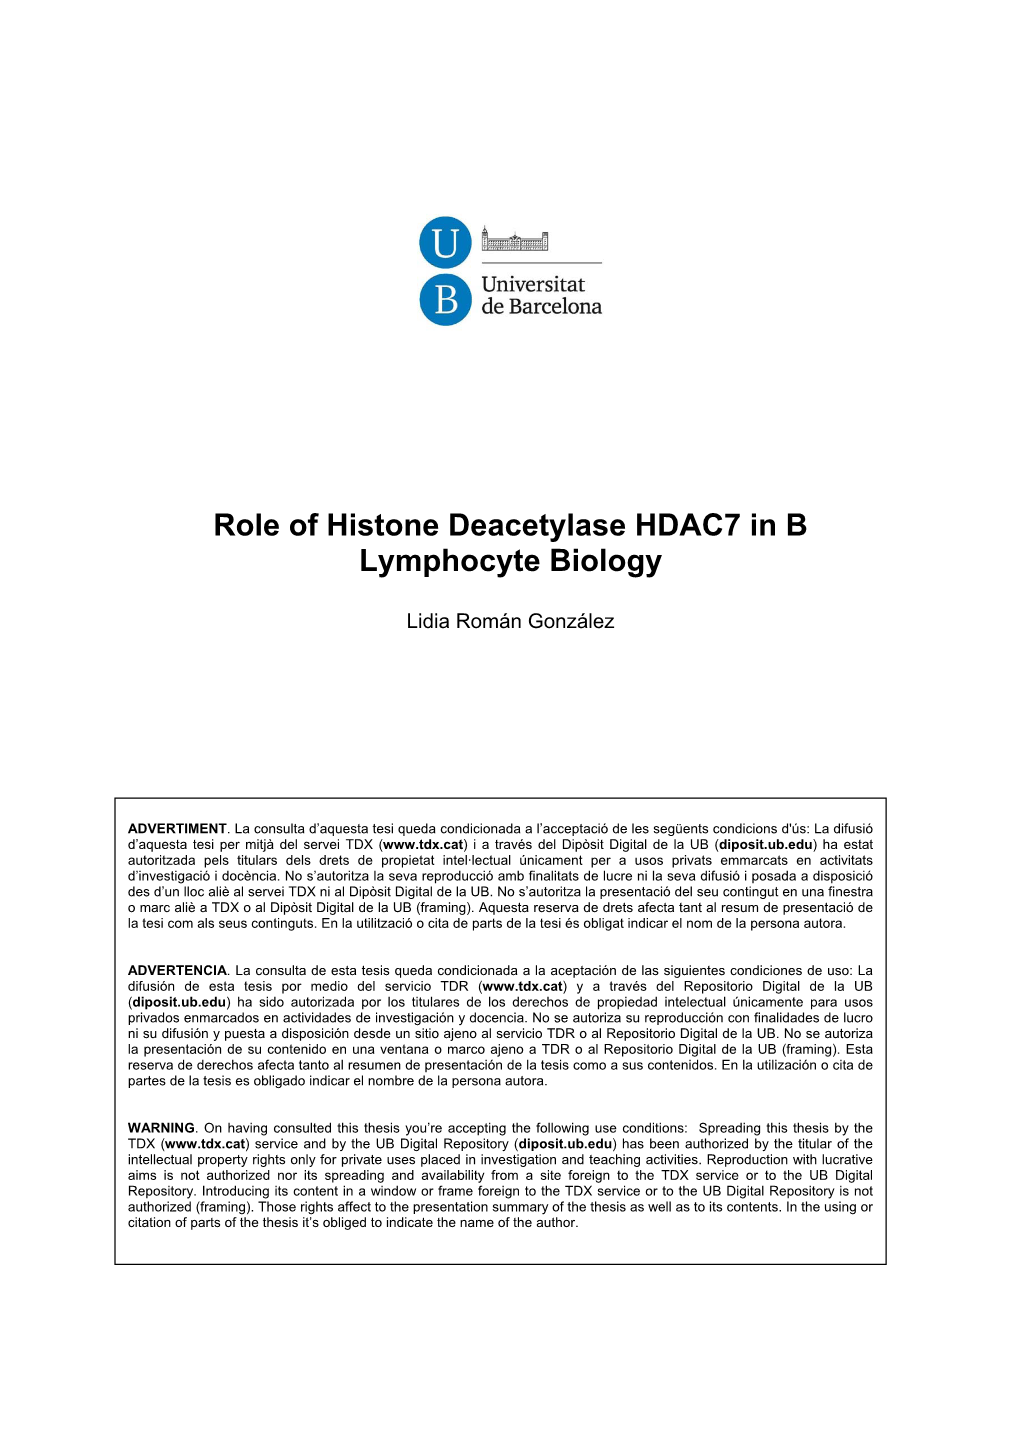 Role of Histone Deacetylase HDAC7 in B Lymphocyte Biology